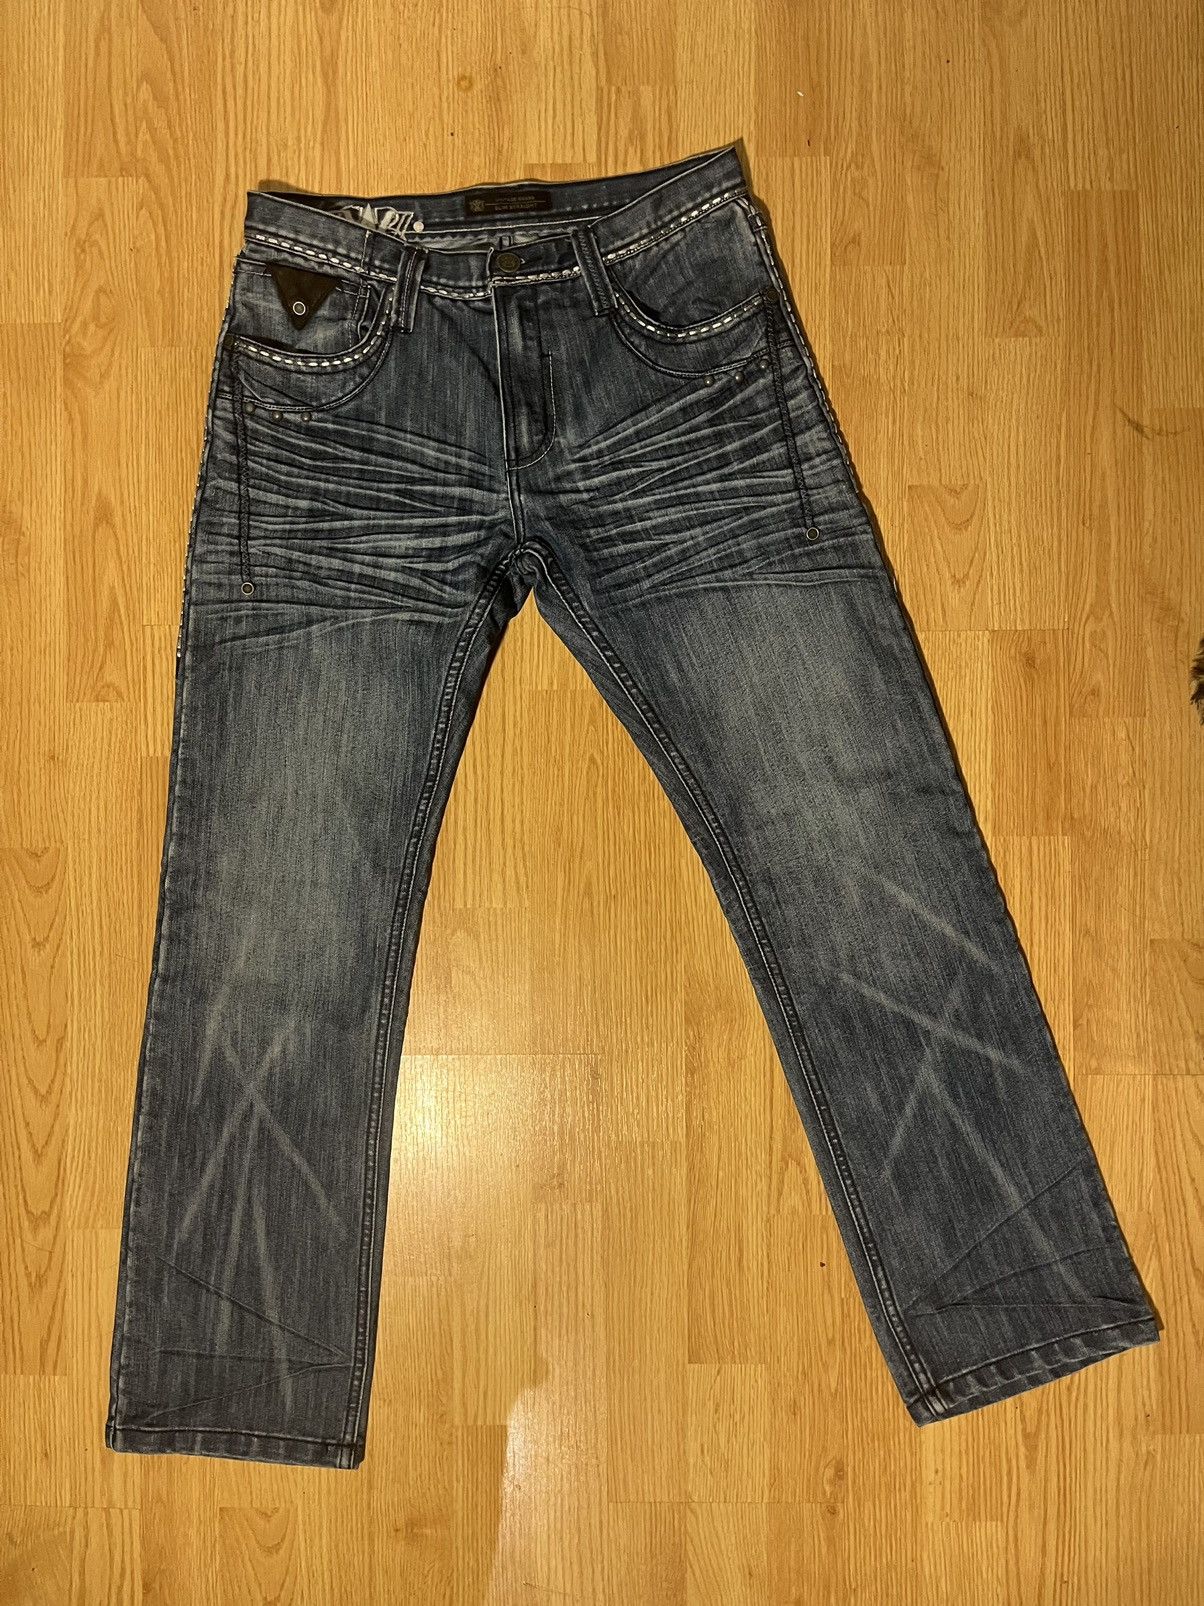 Southpole crazy y2k affliction style baggy jeans Size US 32 / EU 48 - 4 Thumbnail